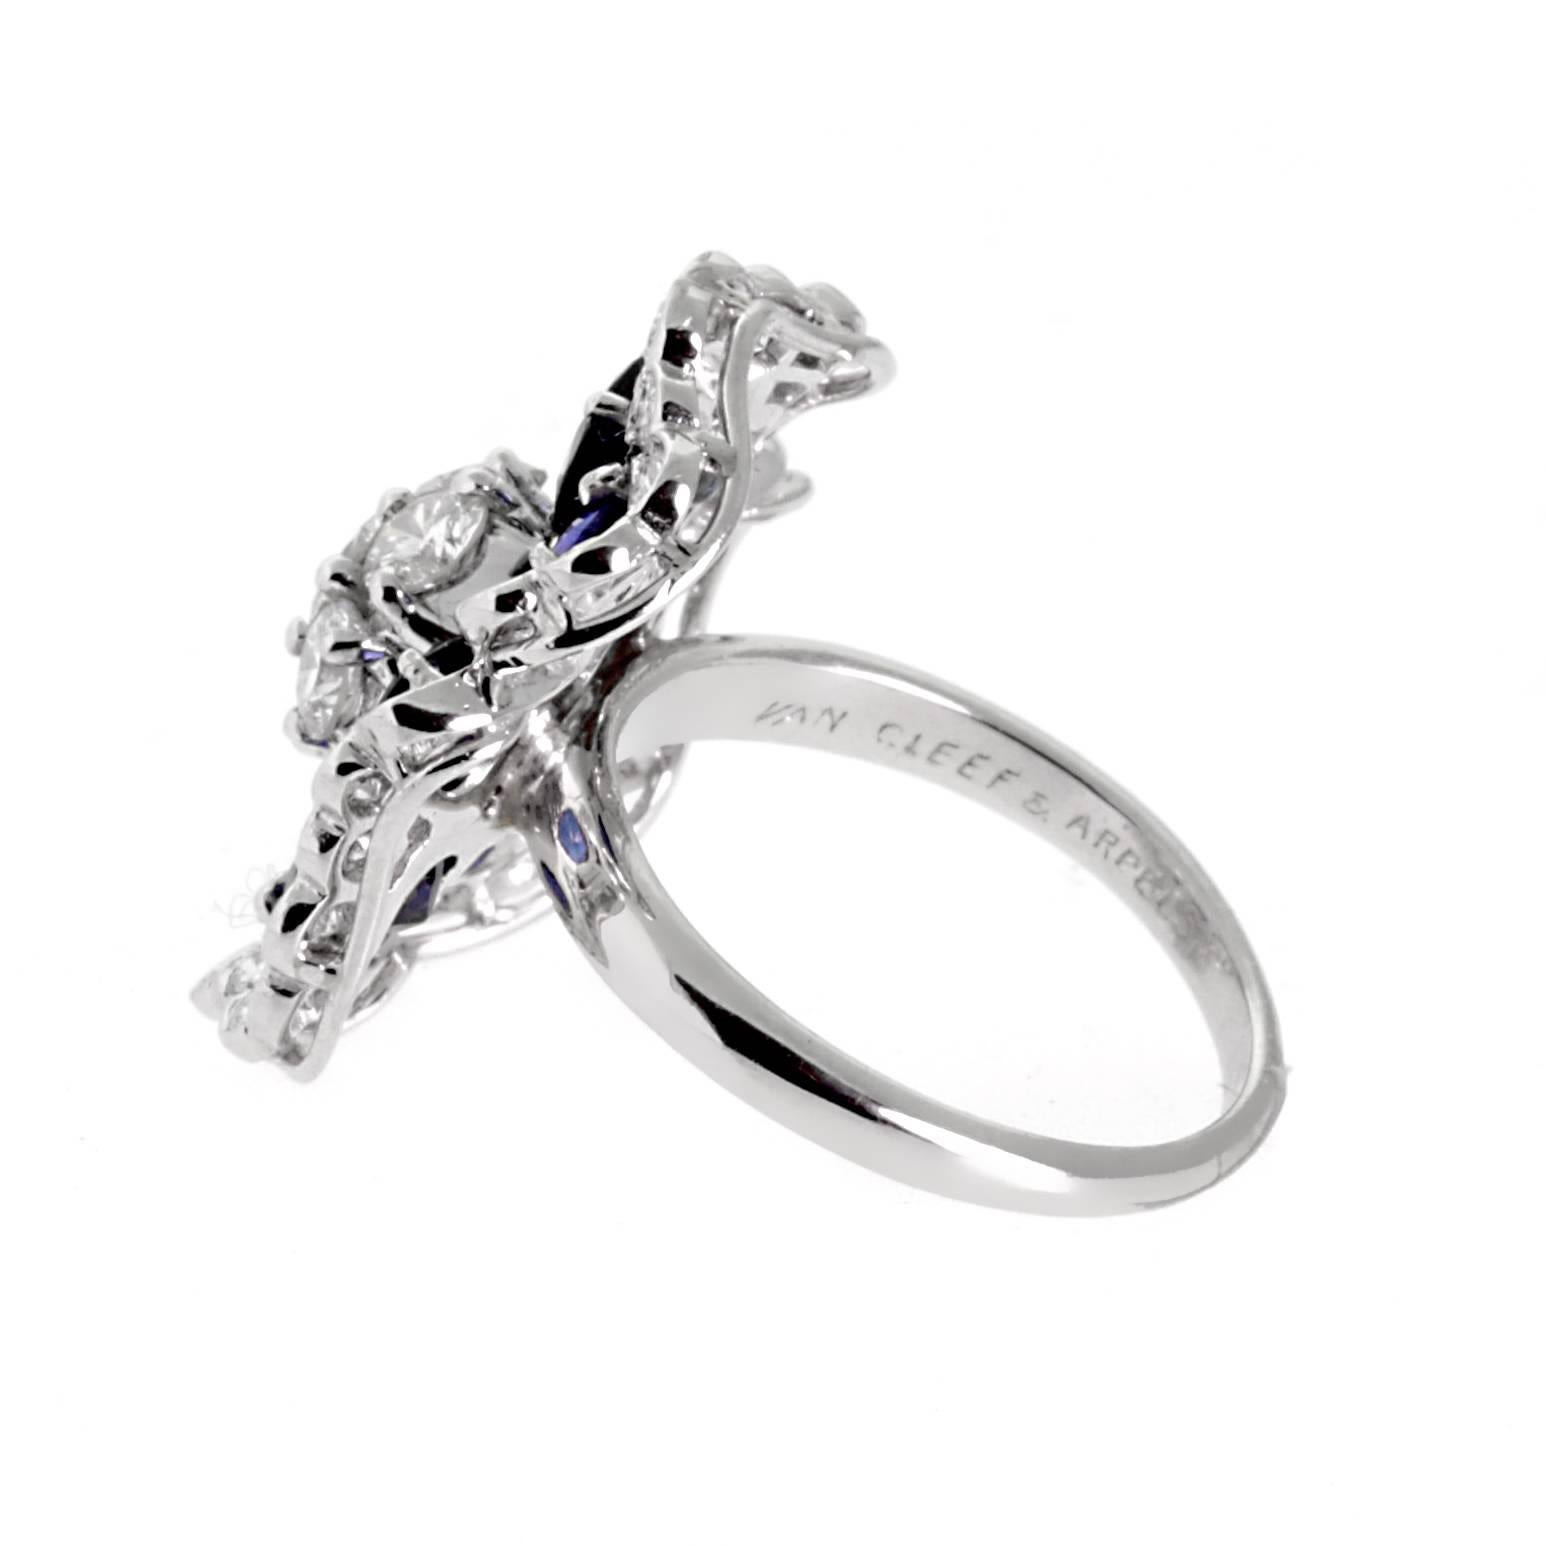 Round Cut Van Cleef & Arpels Camellia Sapphire Diamond Ring